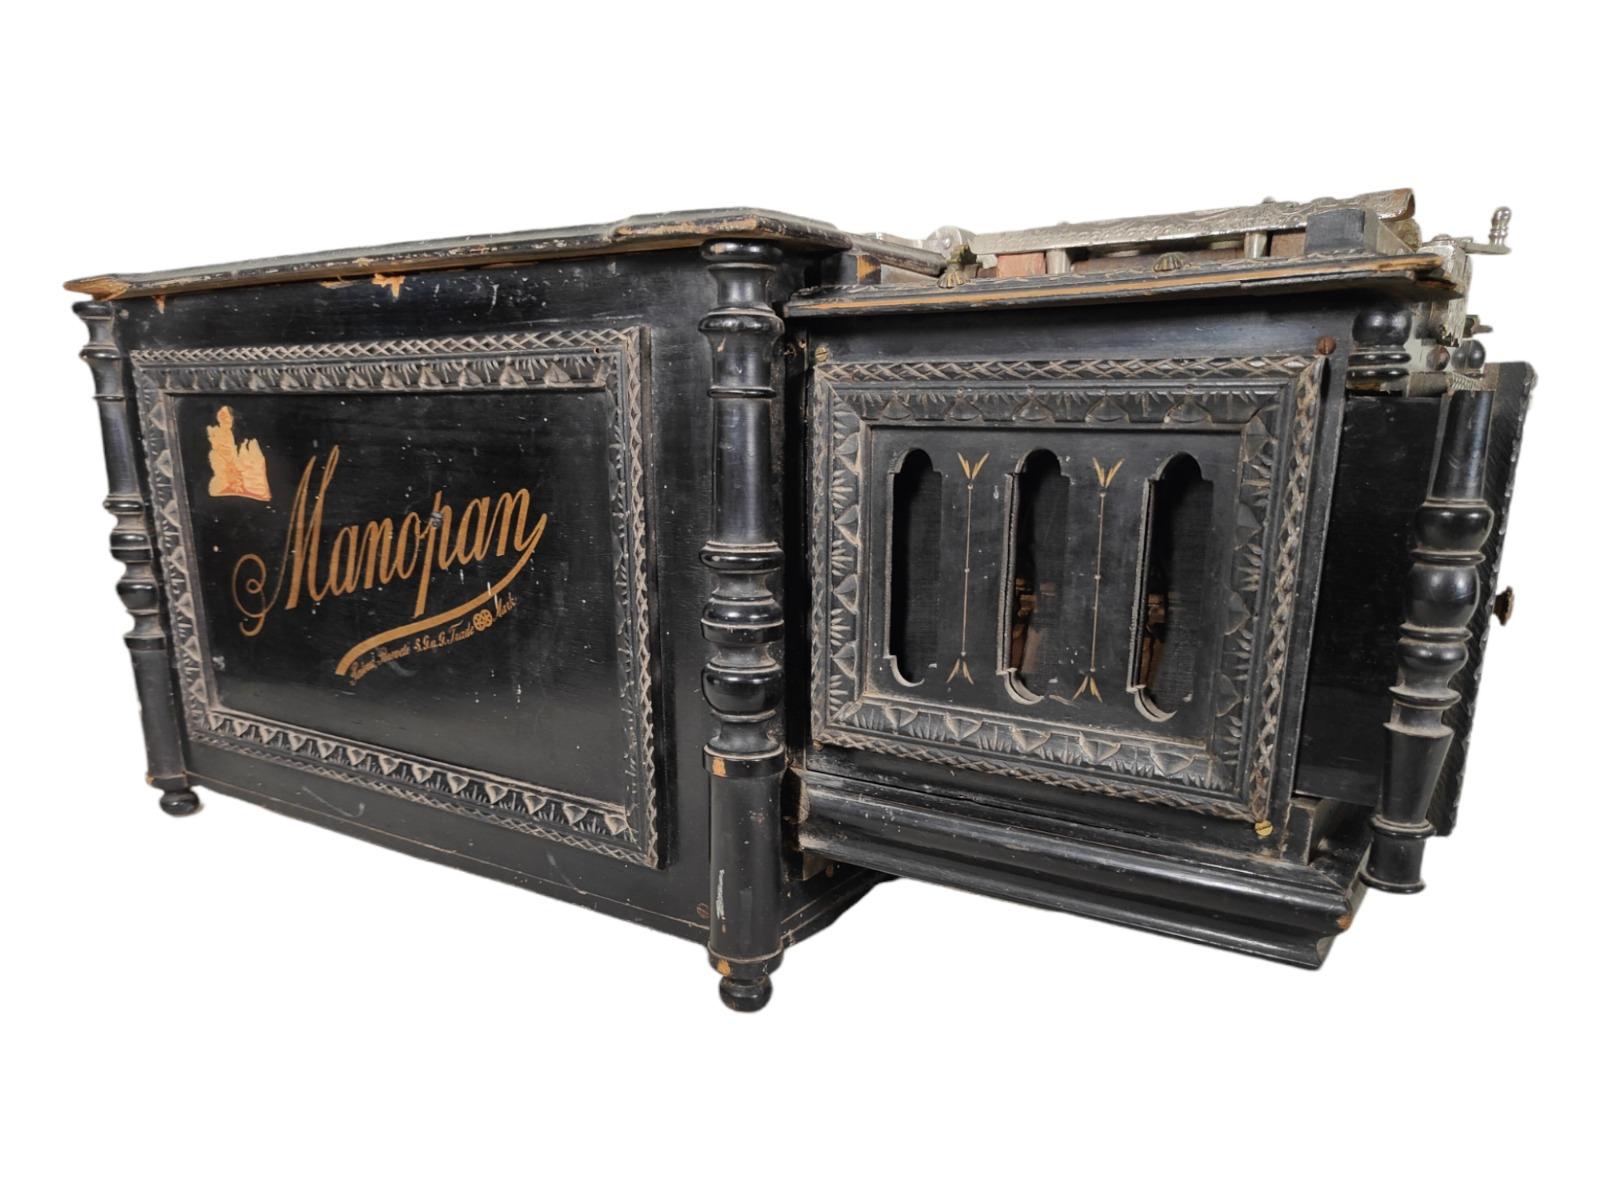 Renaissance Manopan Crank Musical Organ 19th Century For Sale